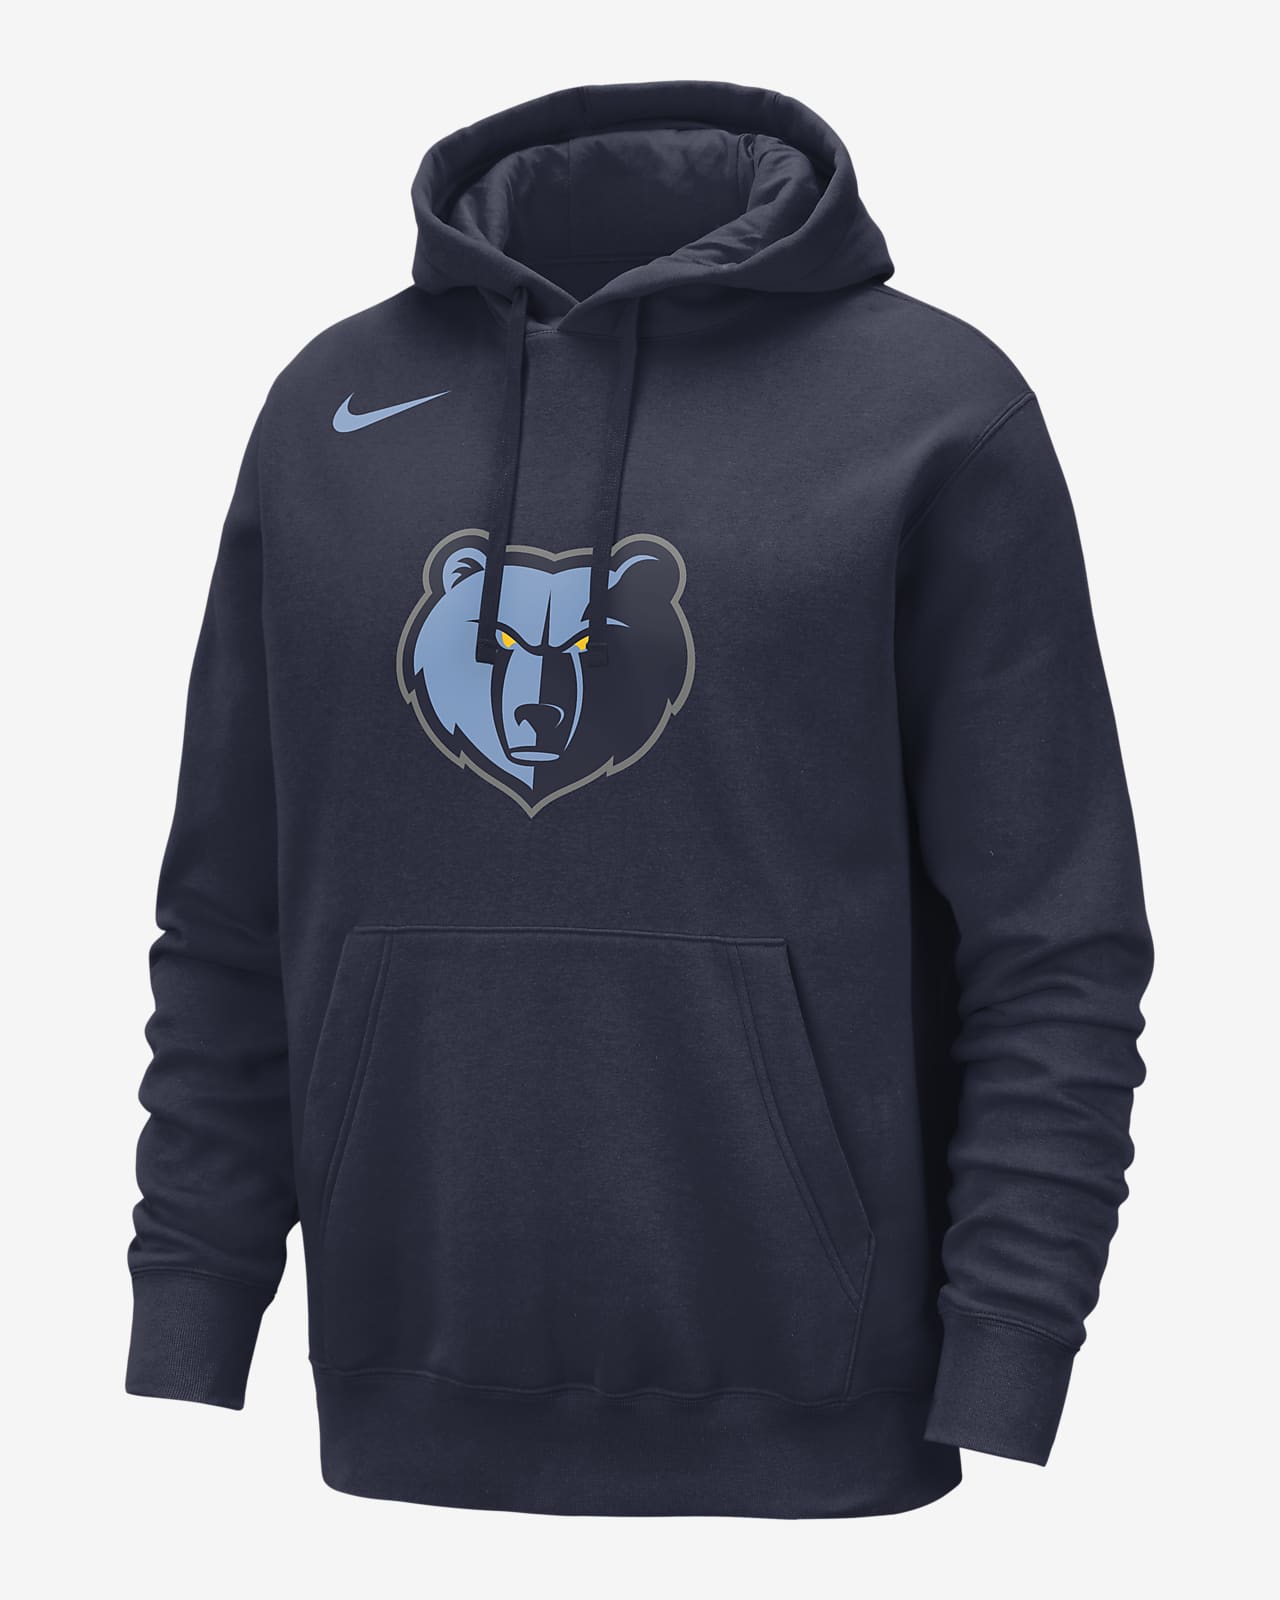 Memphis Grizzlies Club Nike NBA-hoodie voor heren